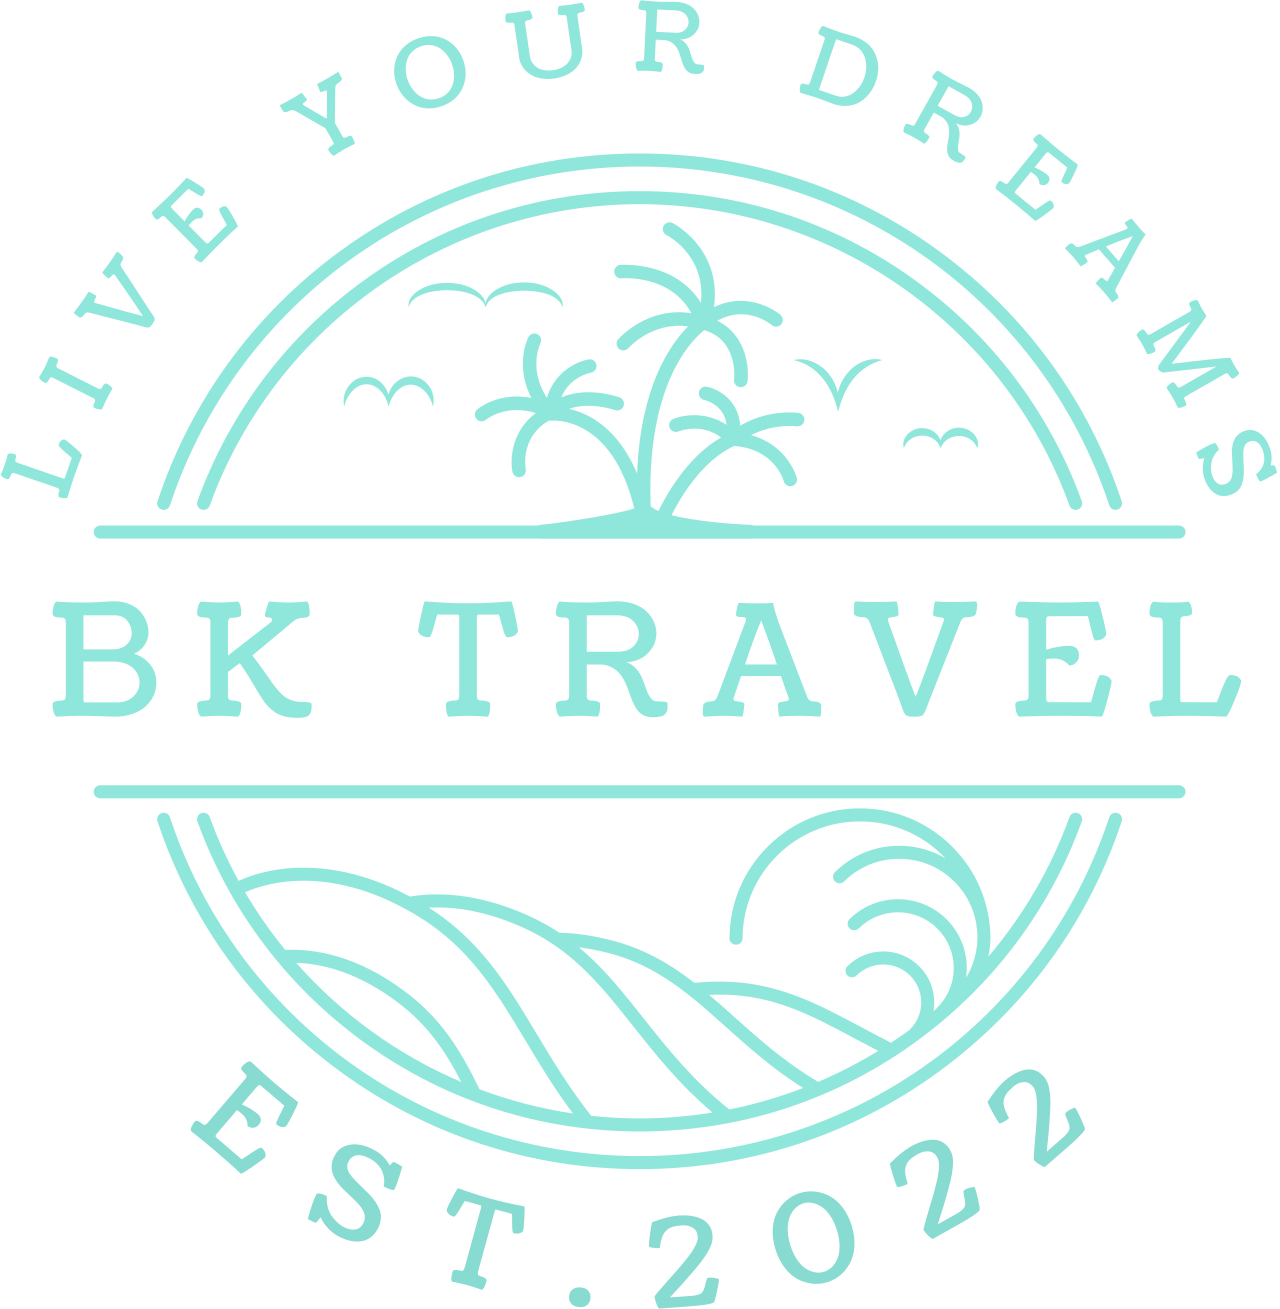 BK TRAVEL's web page